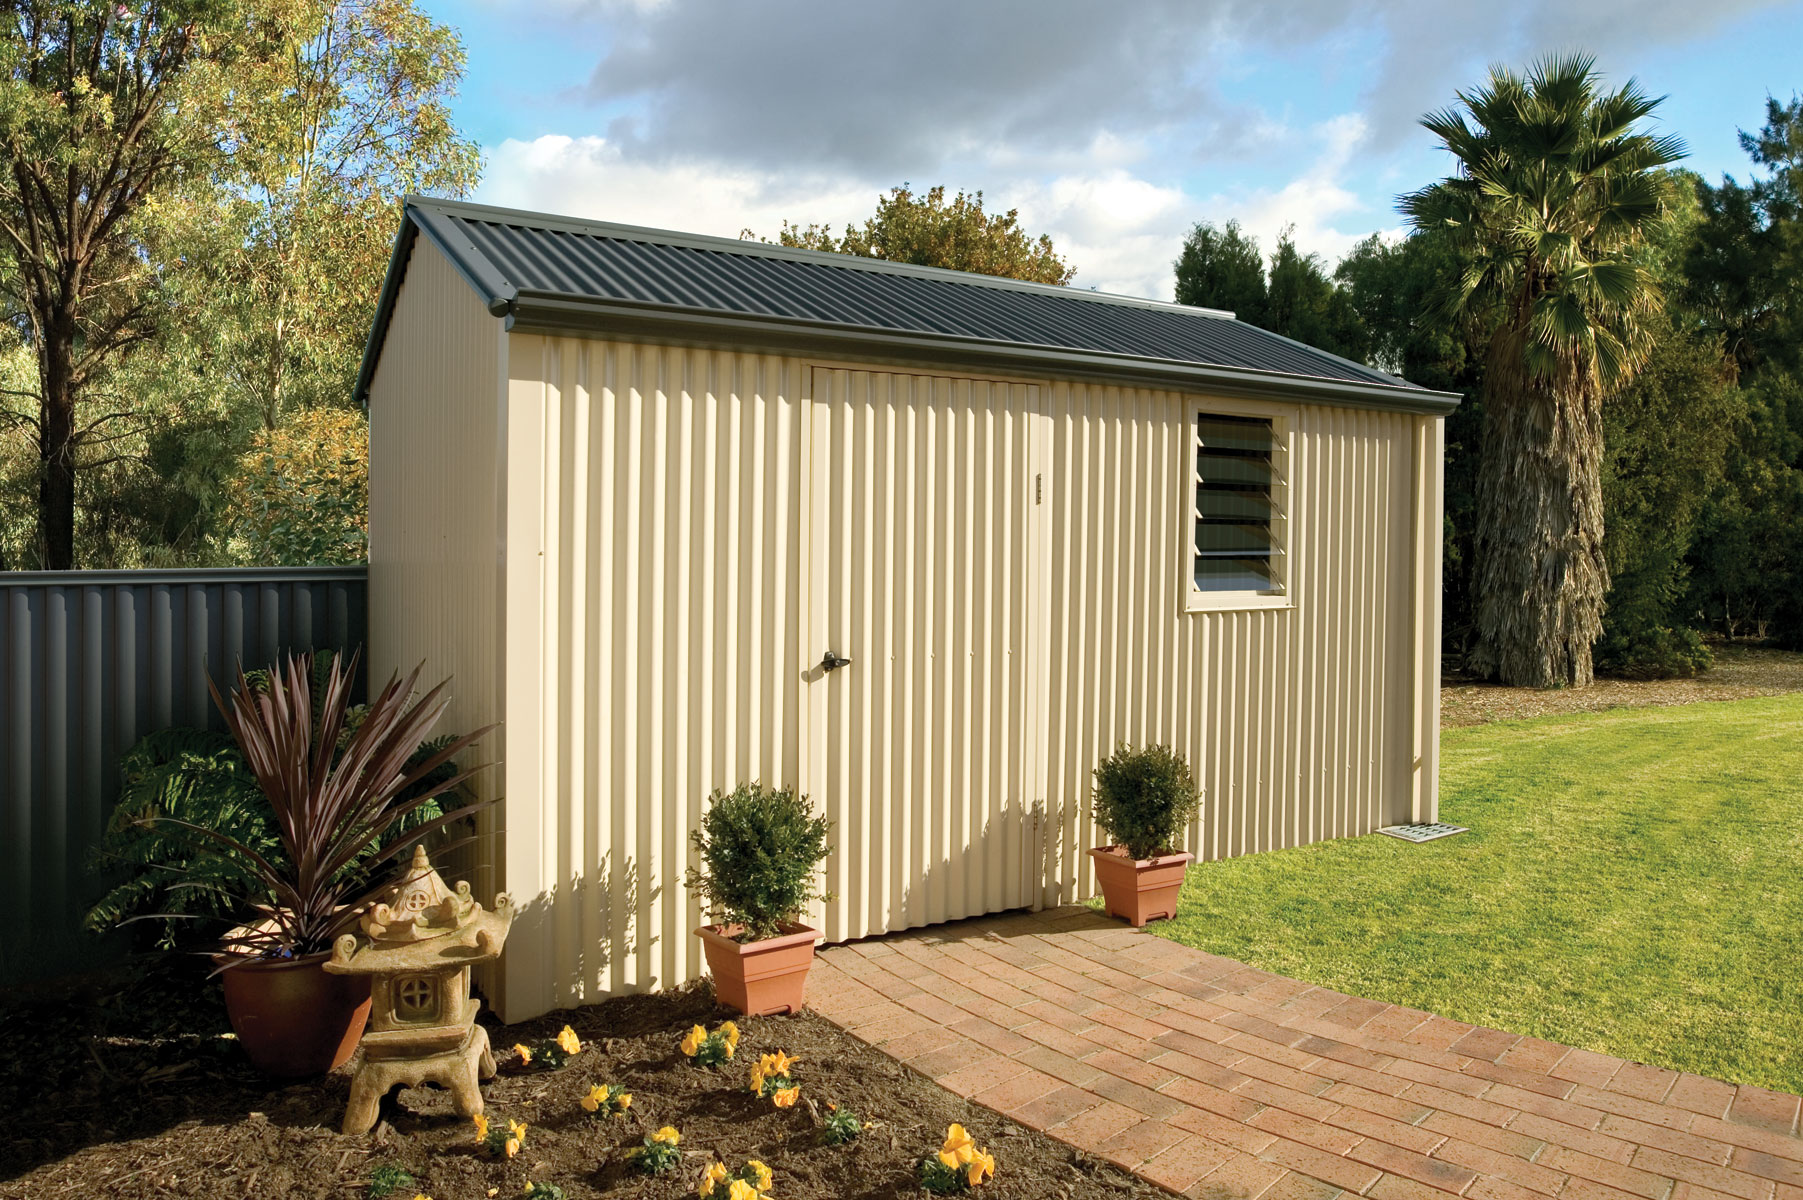 handi-heritage shed h3 3.30x3.30 roof:slate grey wall:primrose